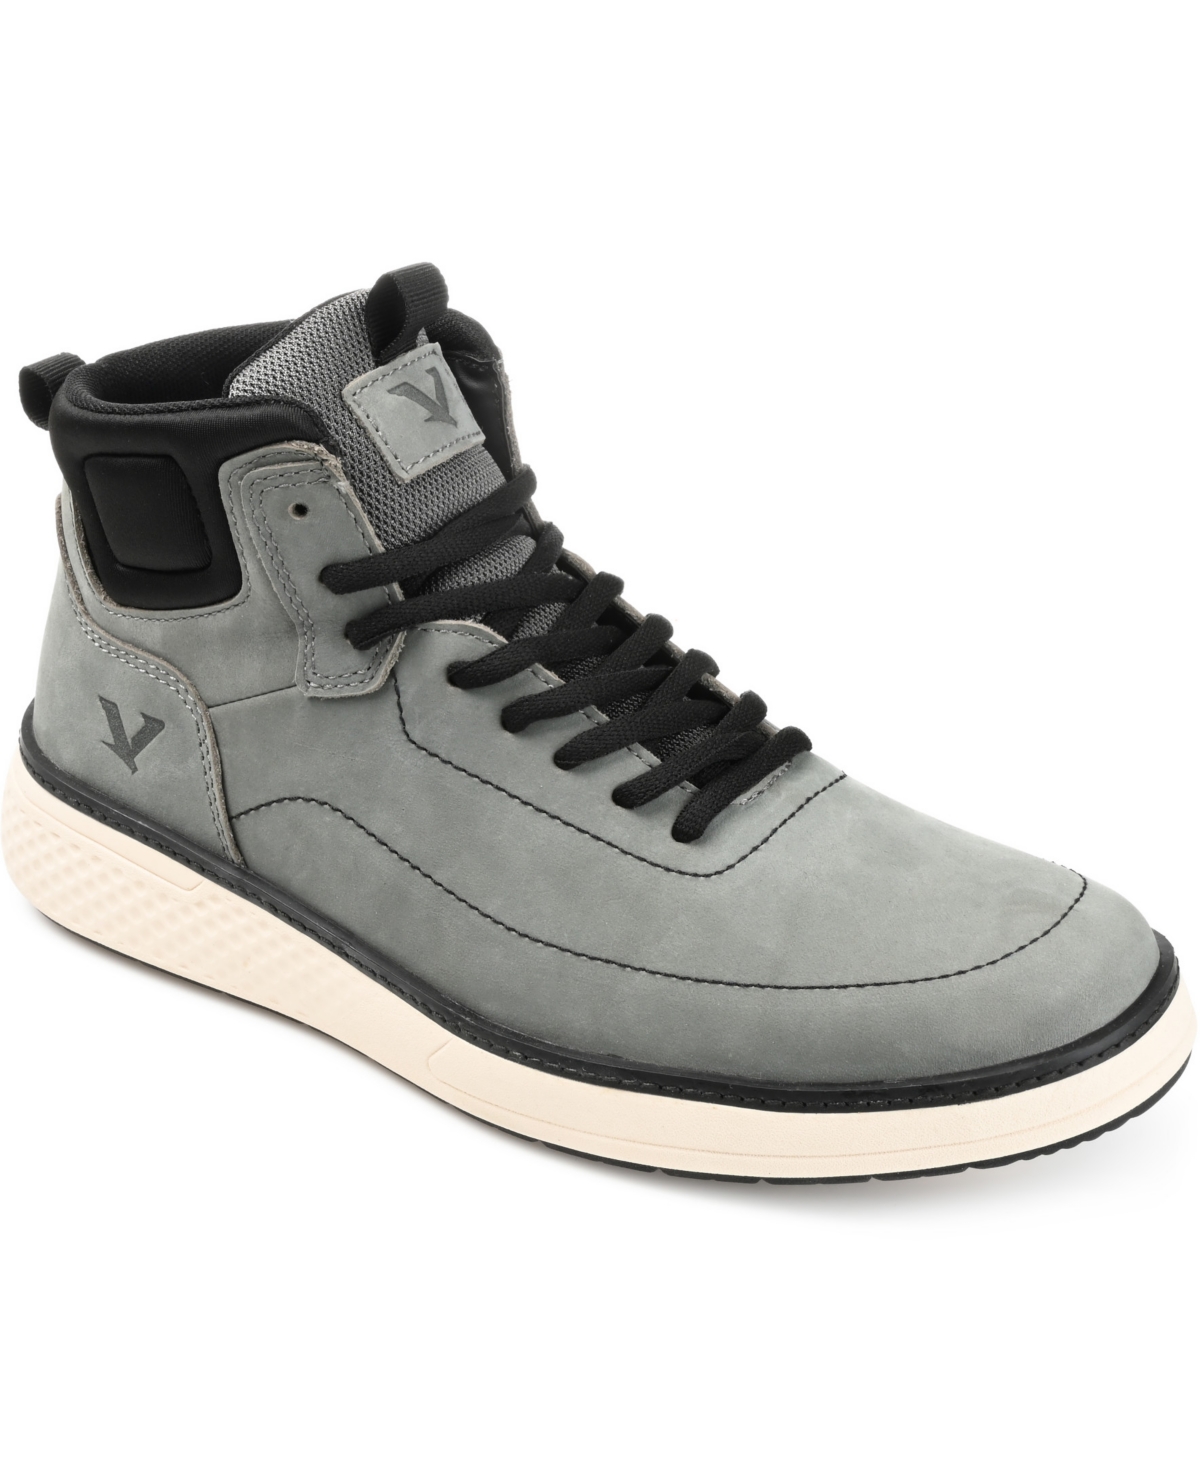 Men's Roam High Top Sneaker Boots - Gray